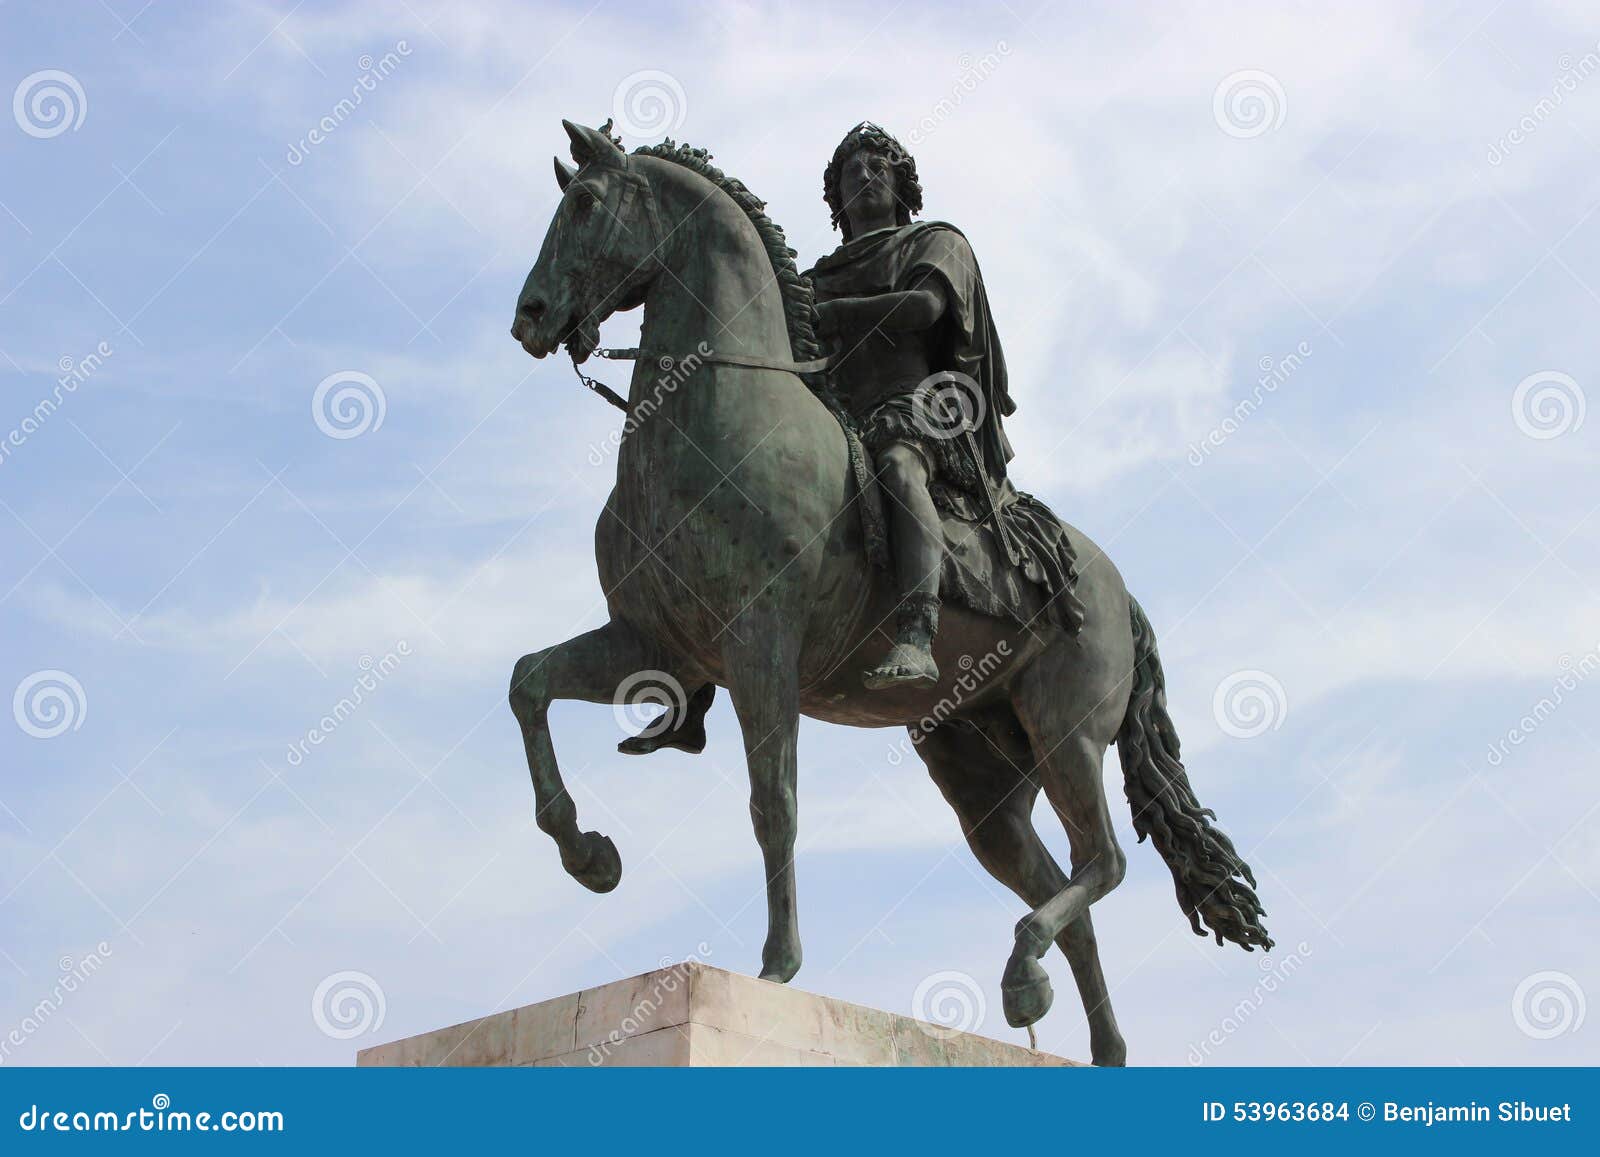 statue of louis xiv on horseback